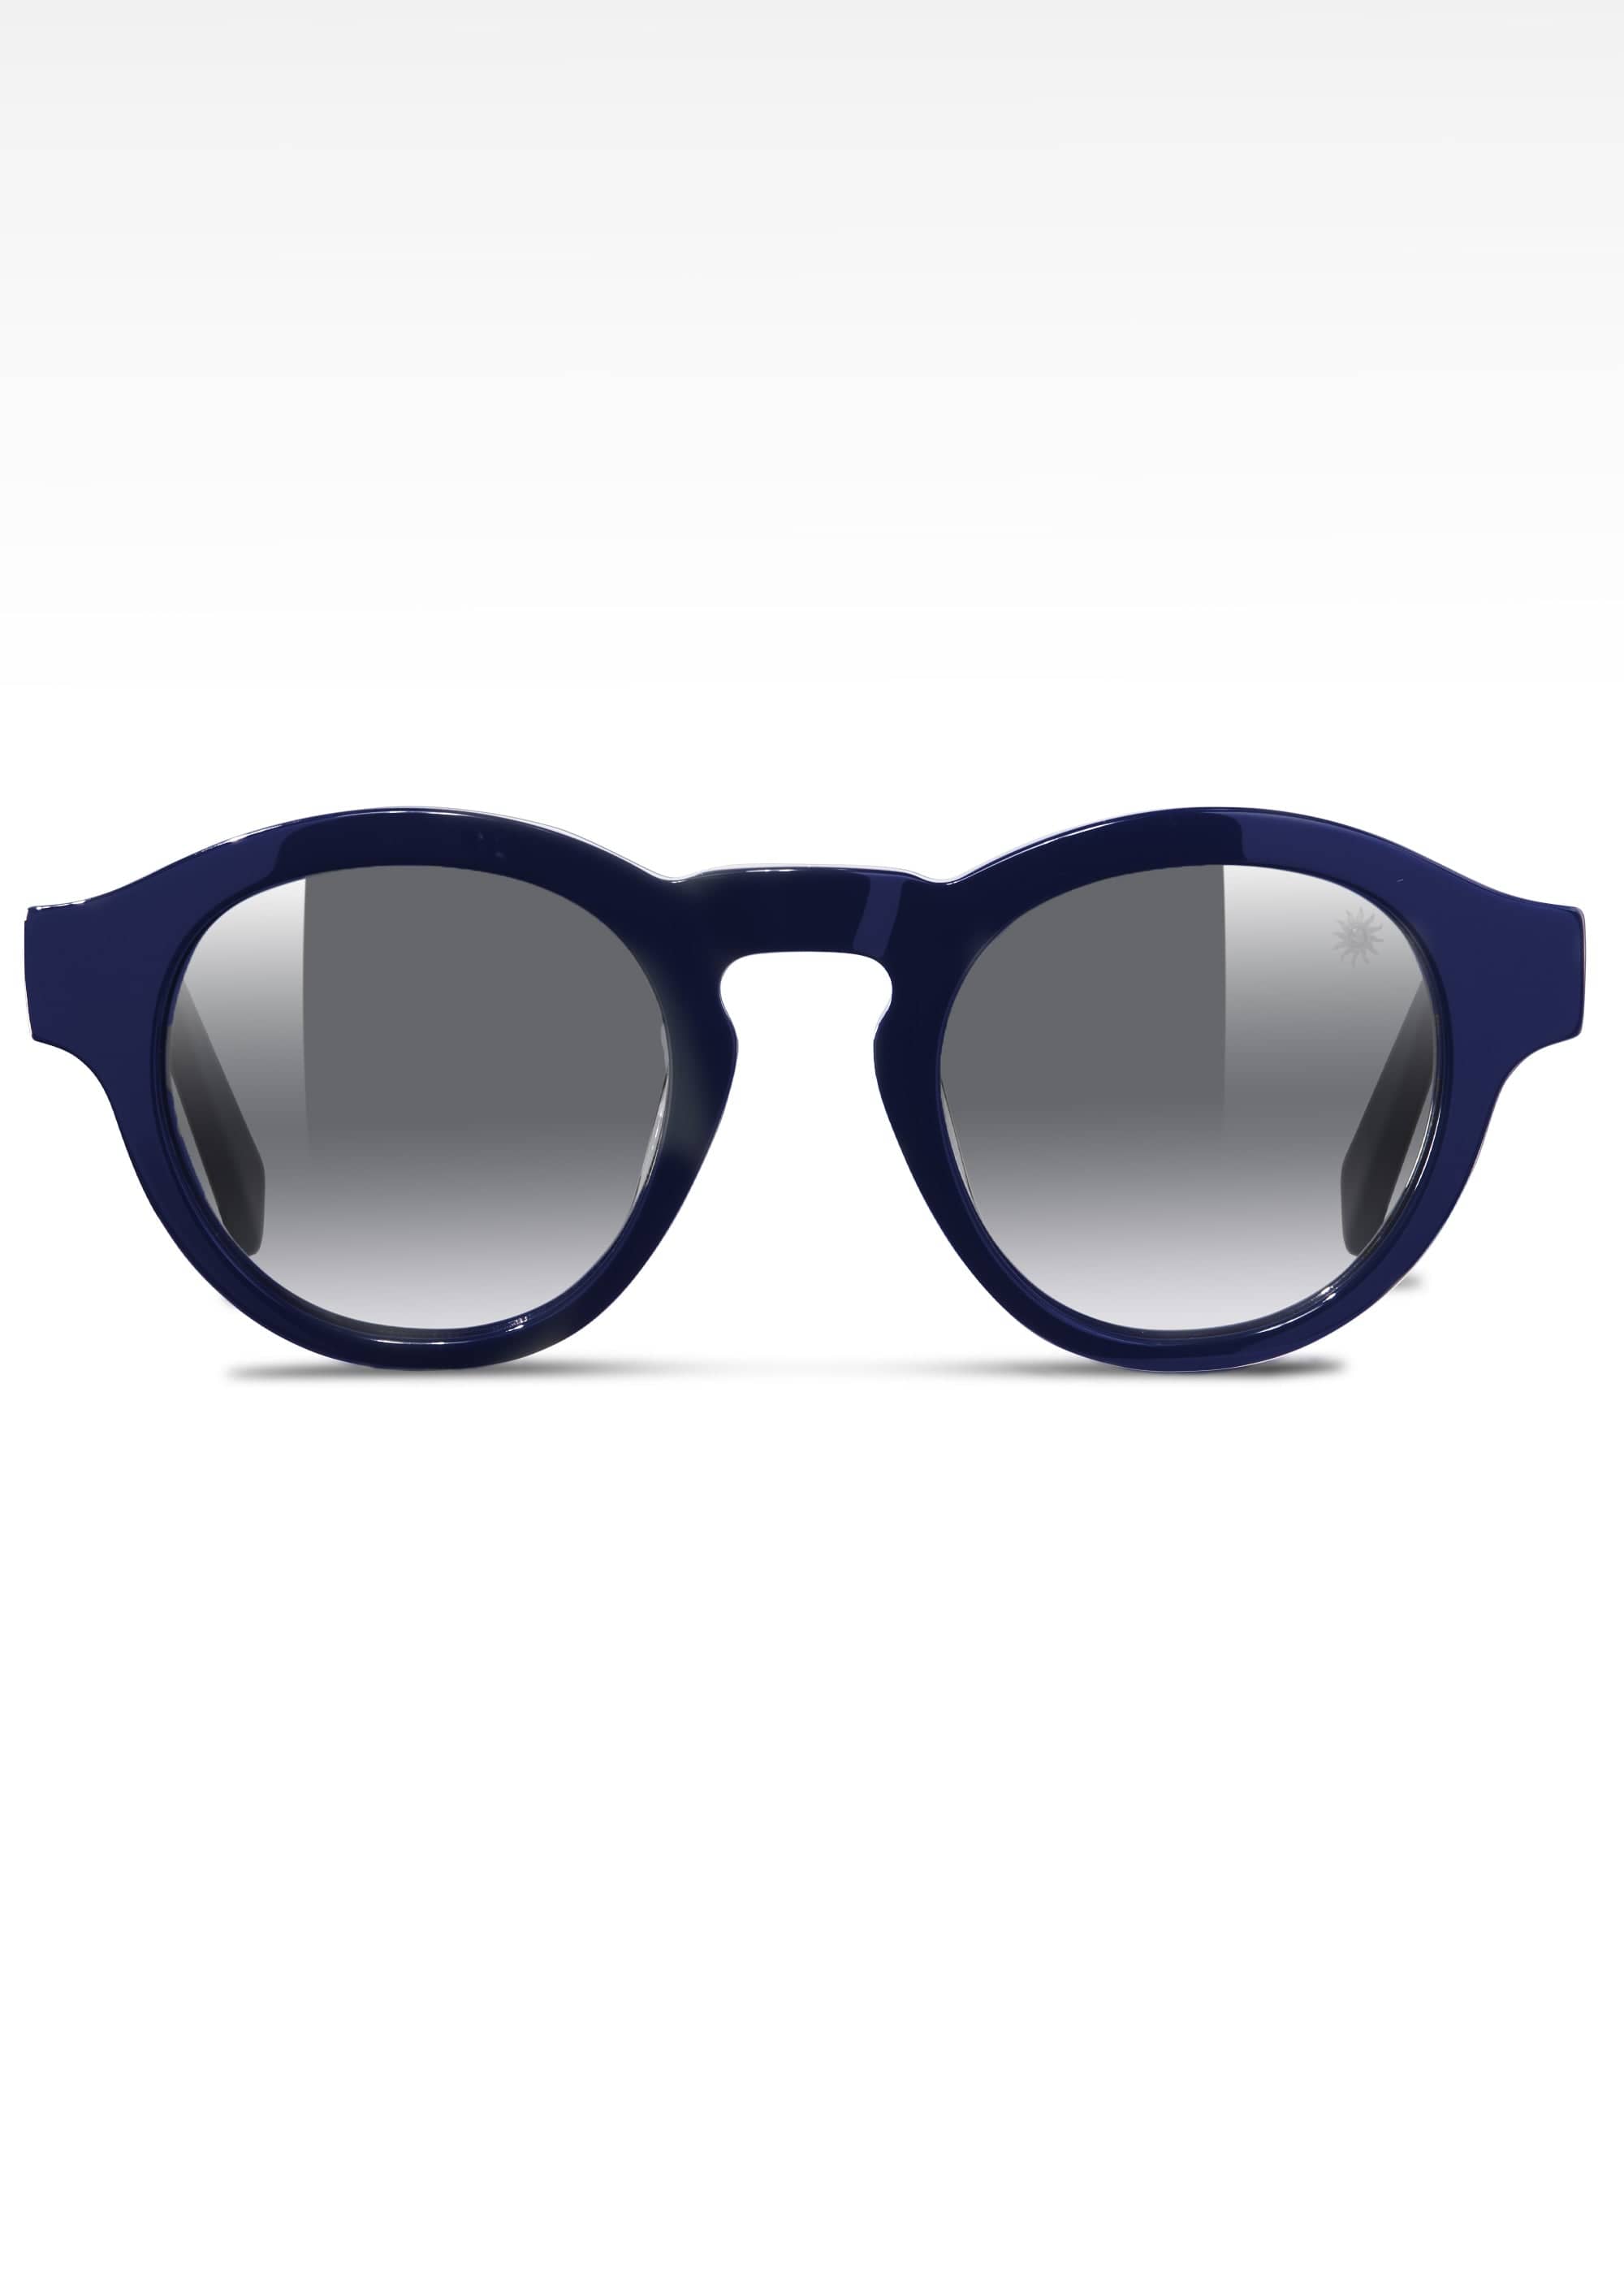 Sandbanks Portofino Sunglasses - Navy